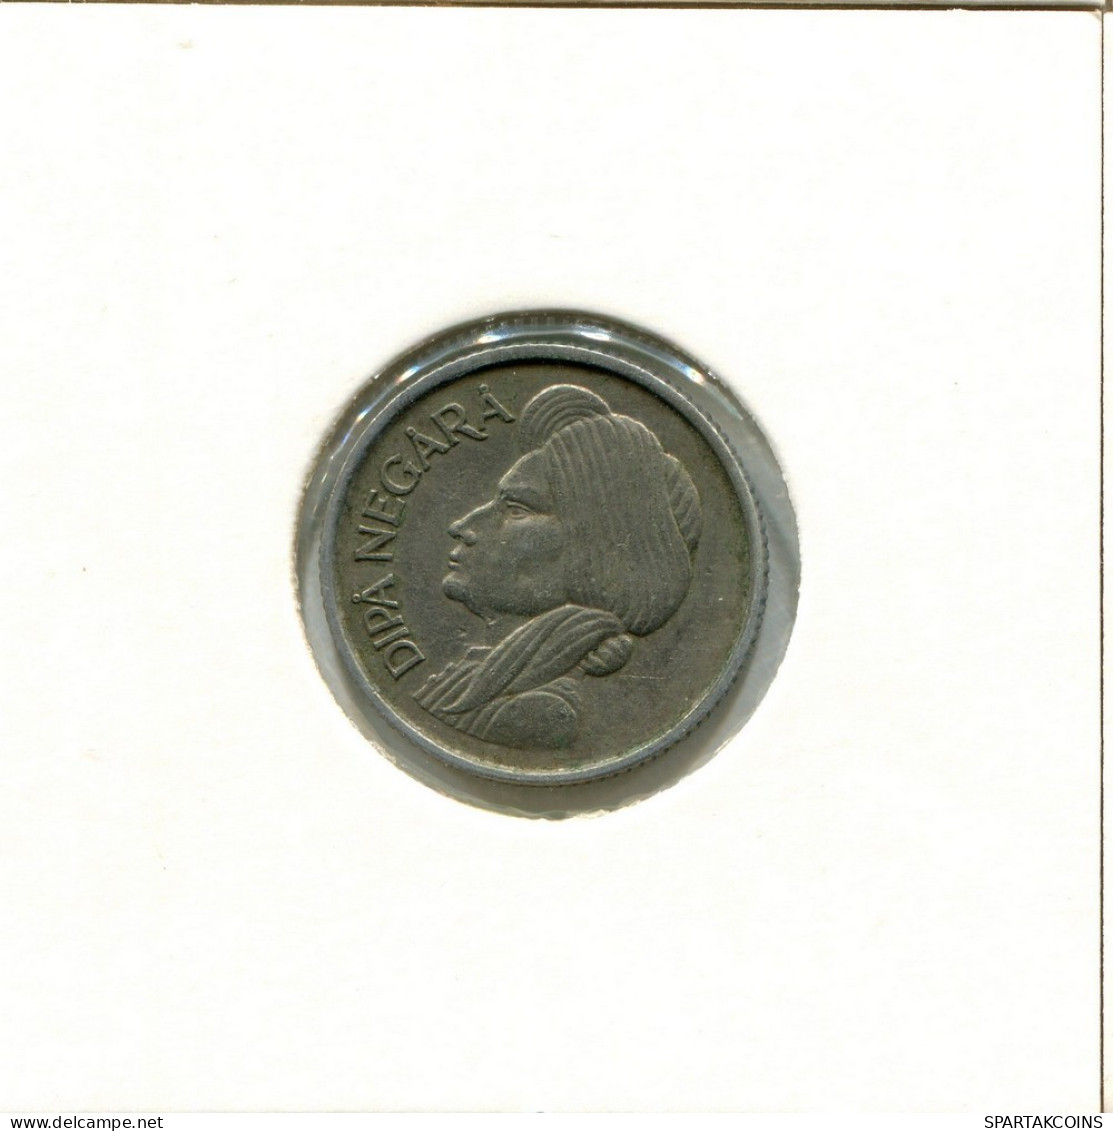 50 SEN 1957 INDONESIA Coin #AY857.U.A - Indonesien